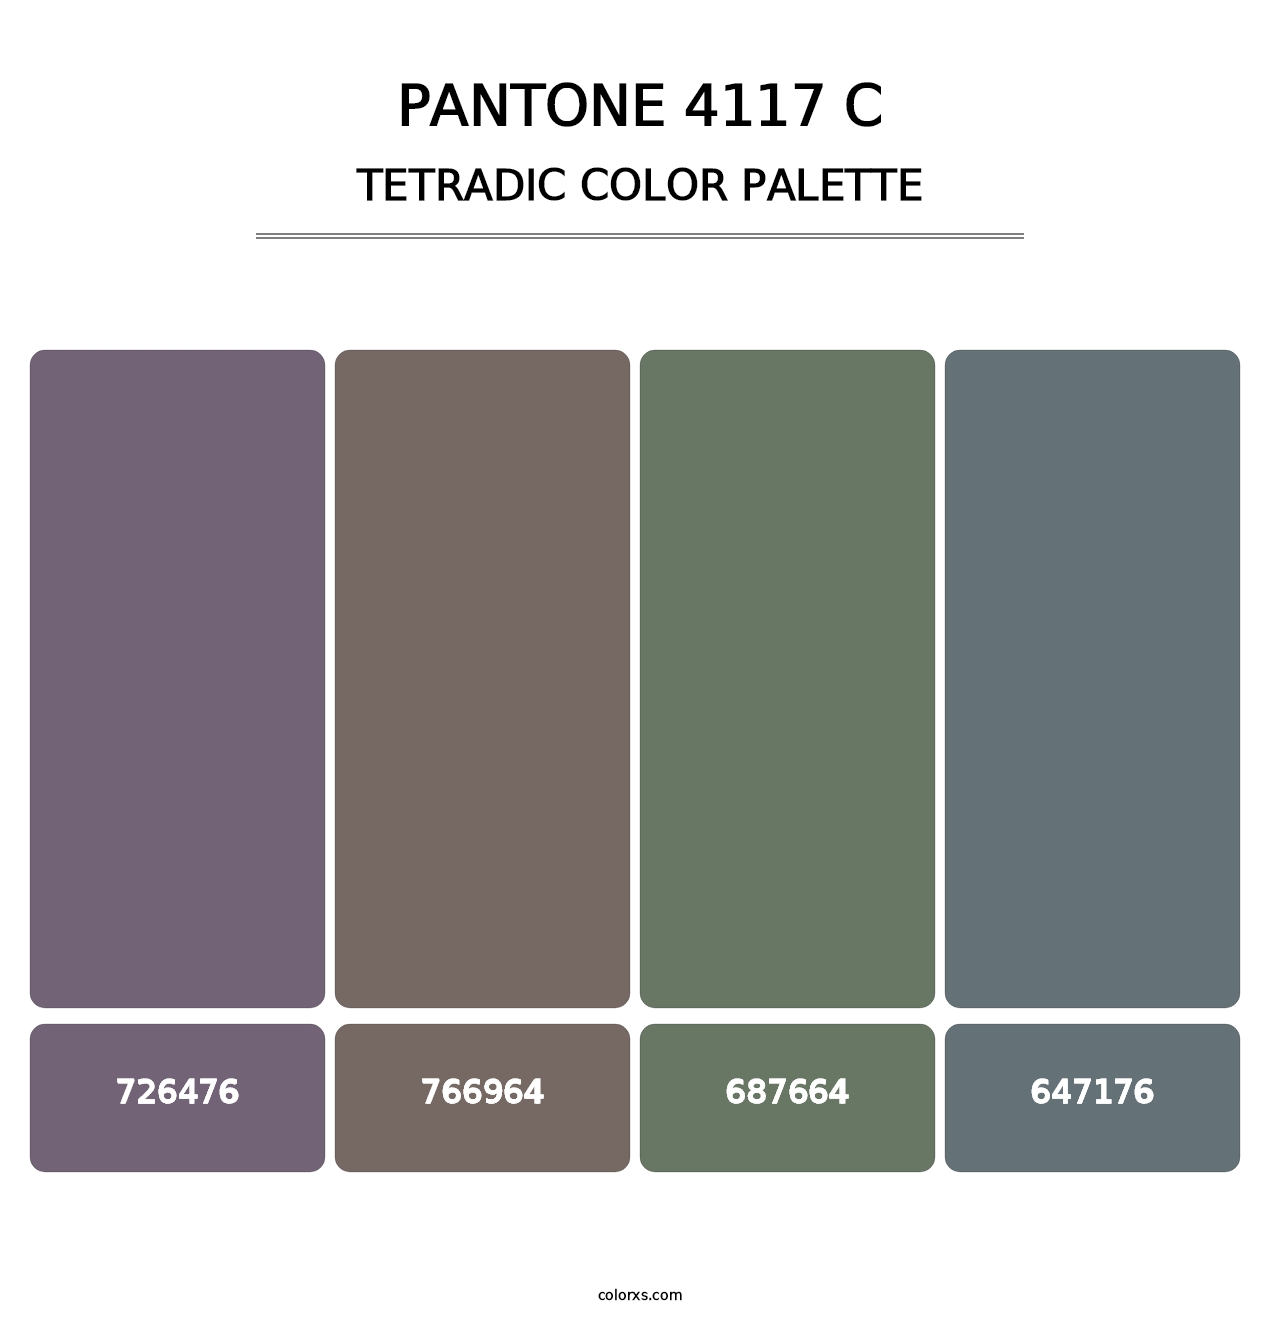 PANTONE 4117 C - Tetradic Color Palette